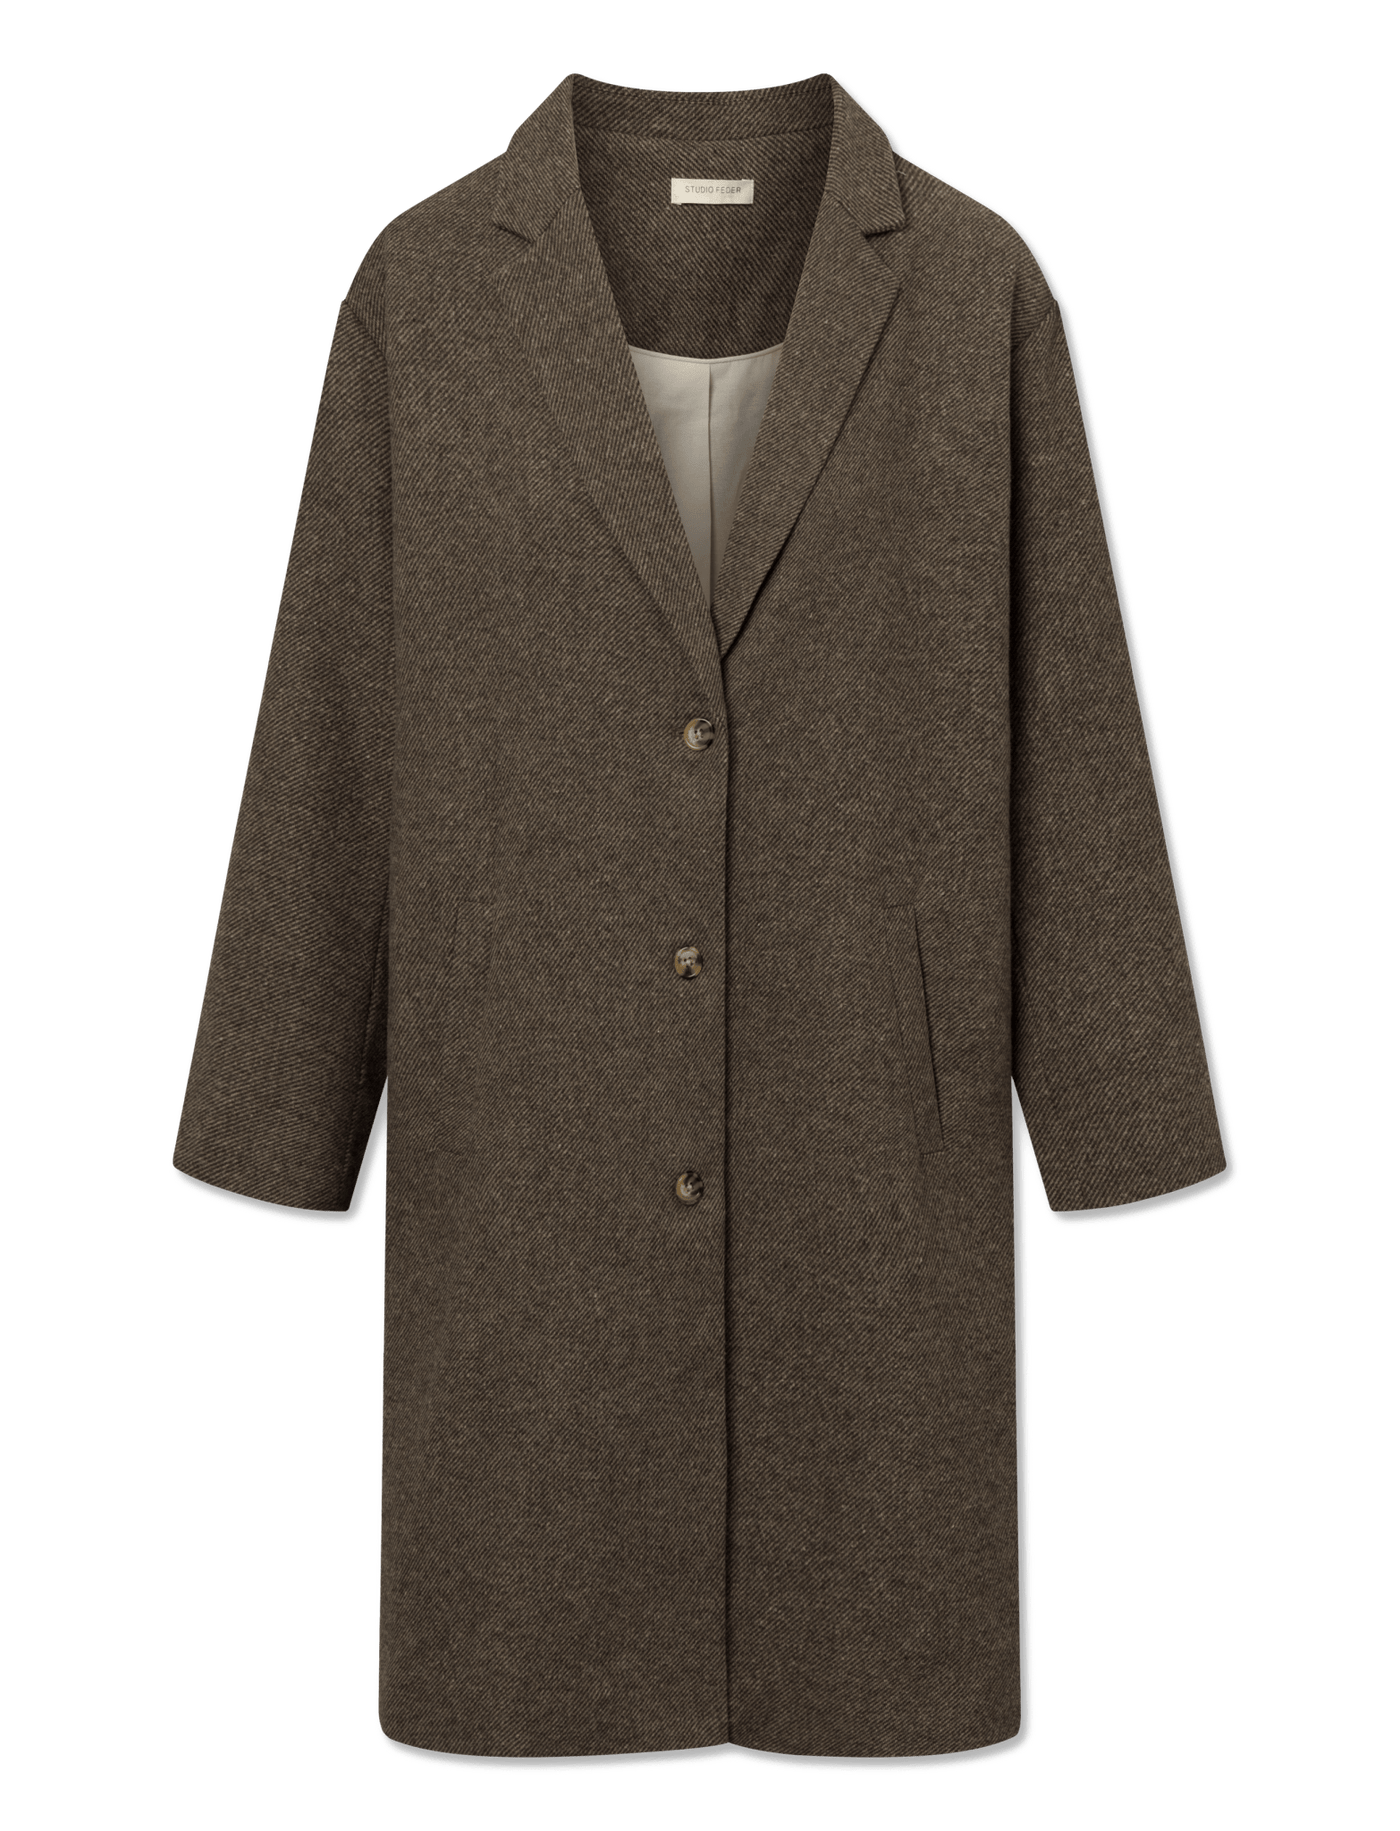 Carmina Coat - Brown Herringbone